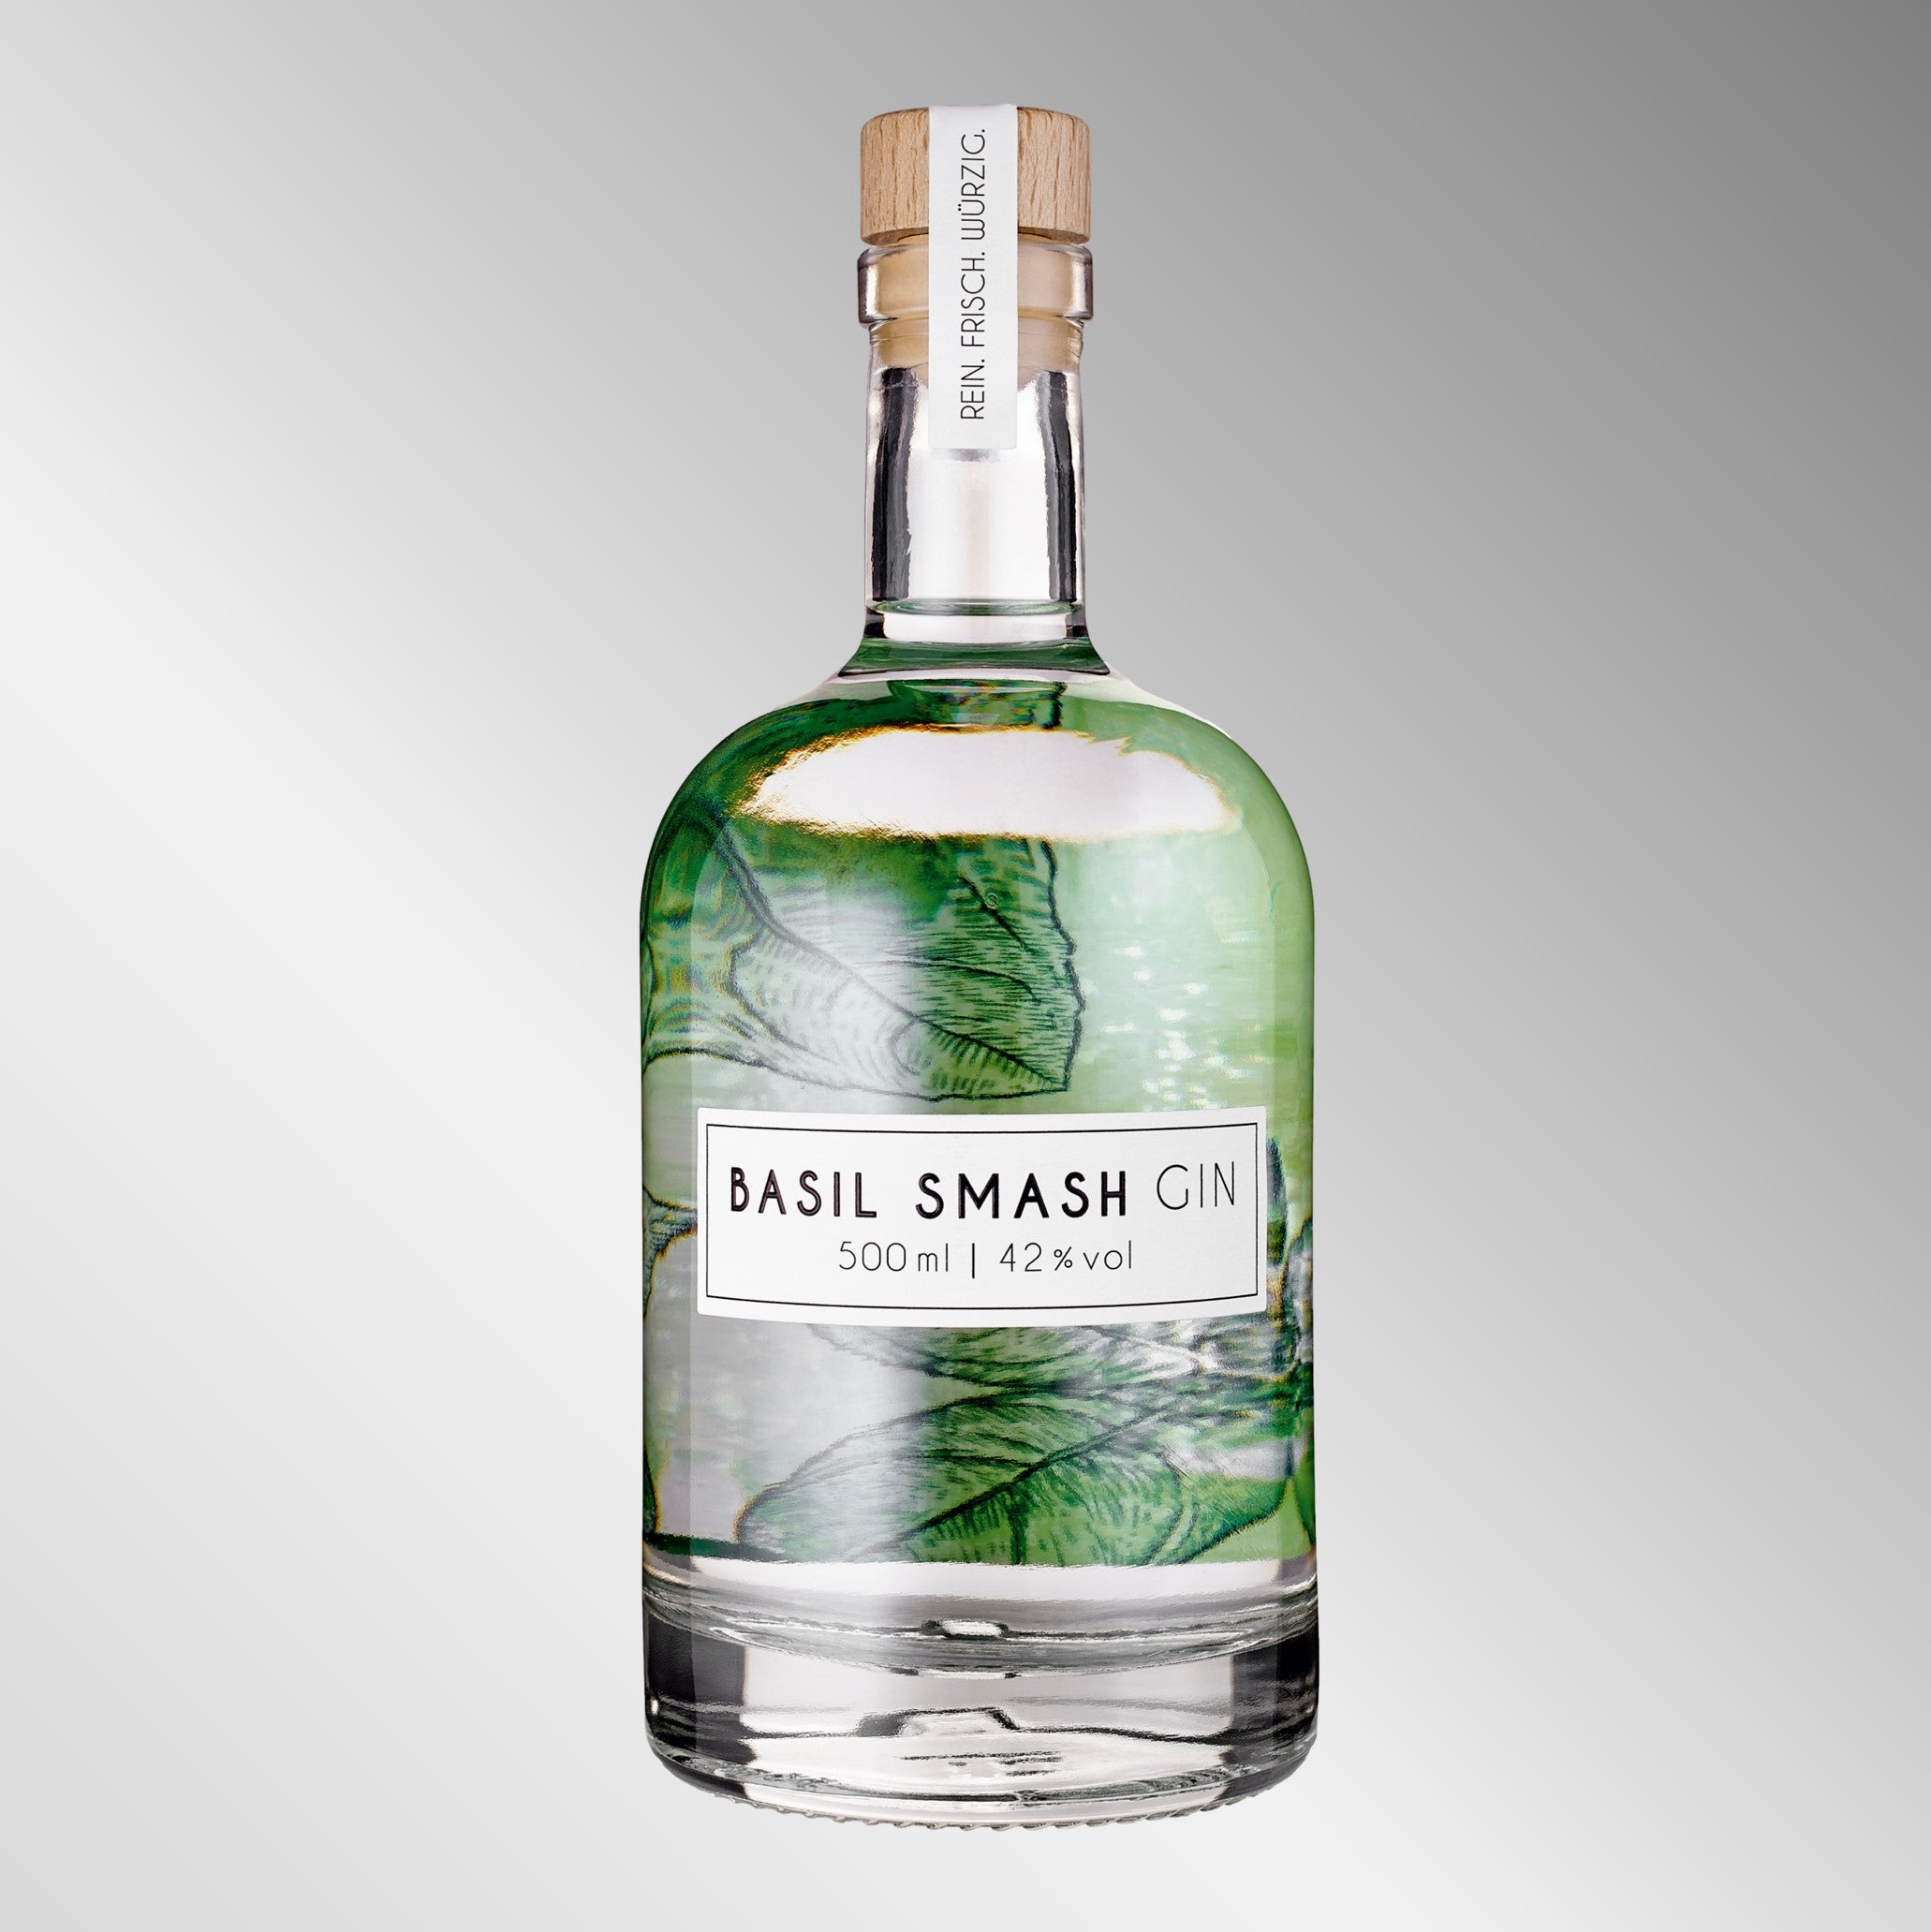 BASIL SMASH GIN - 500 ml Flasche -42% vol